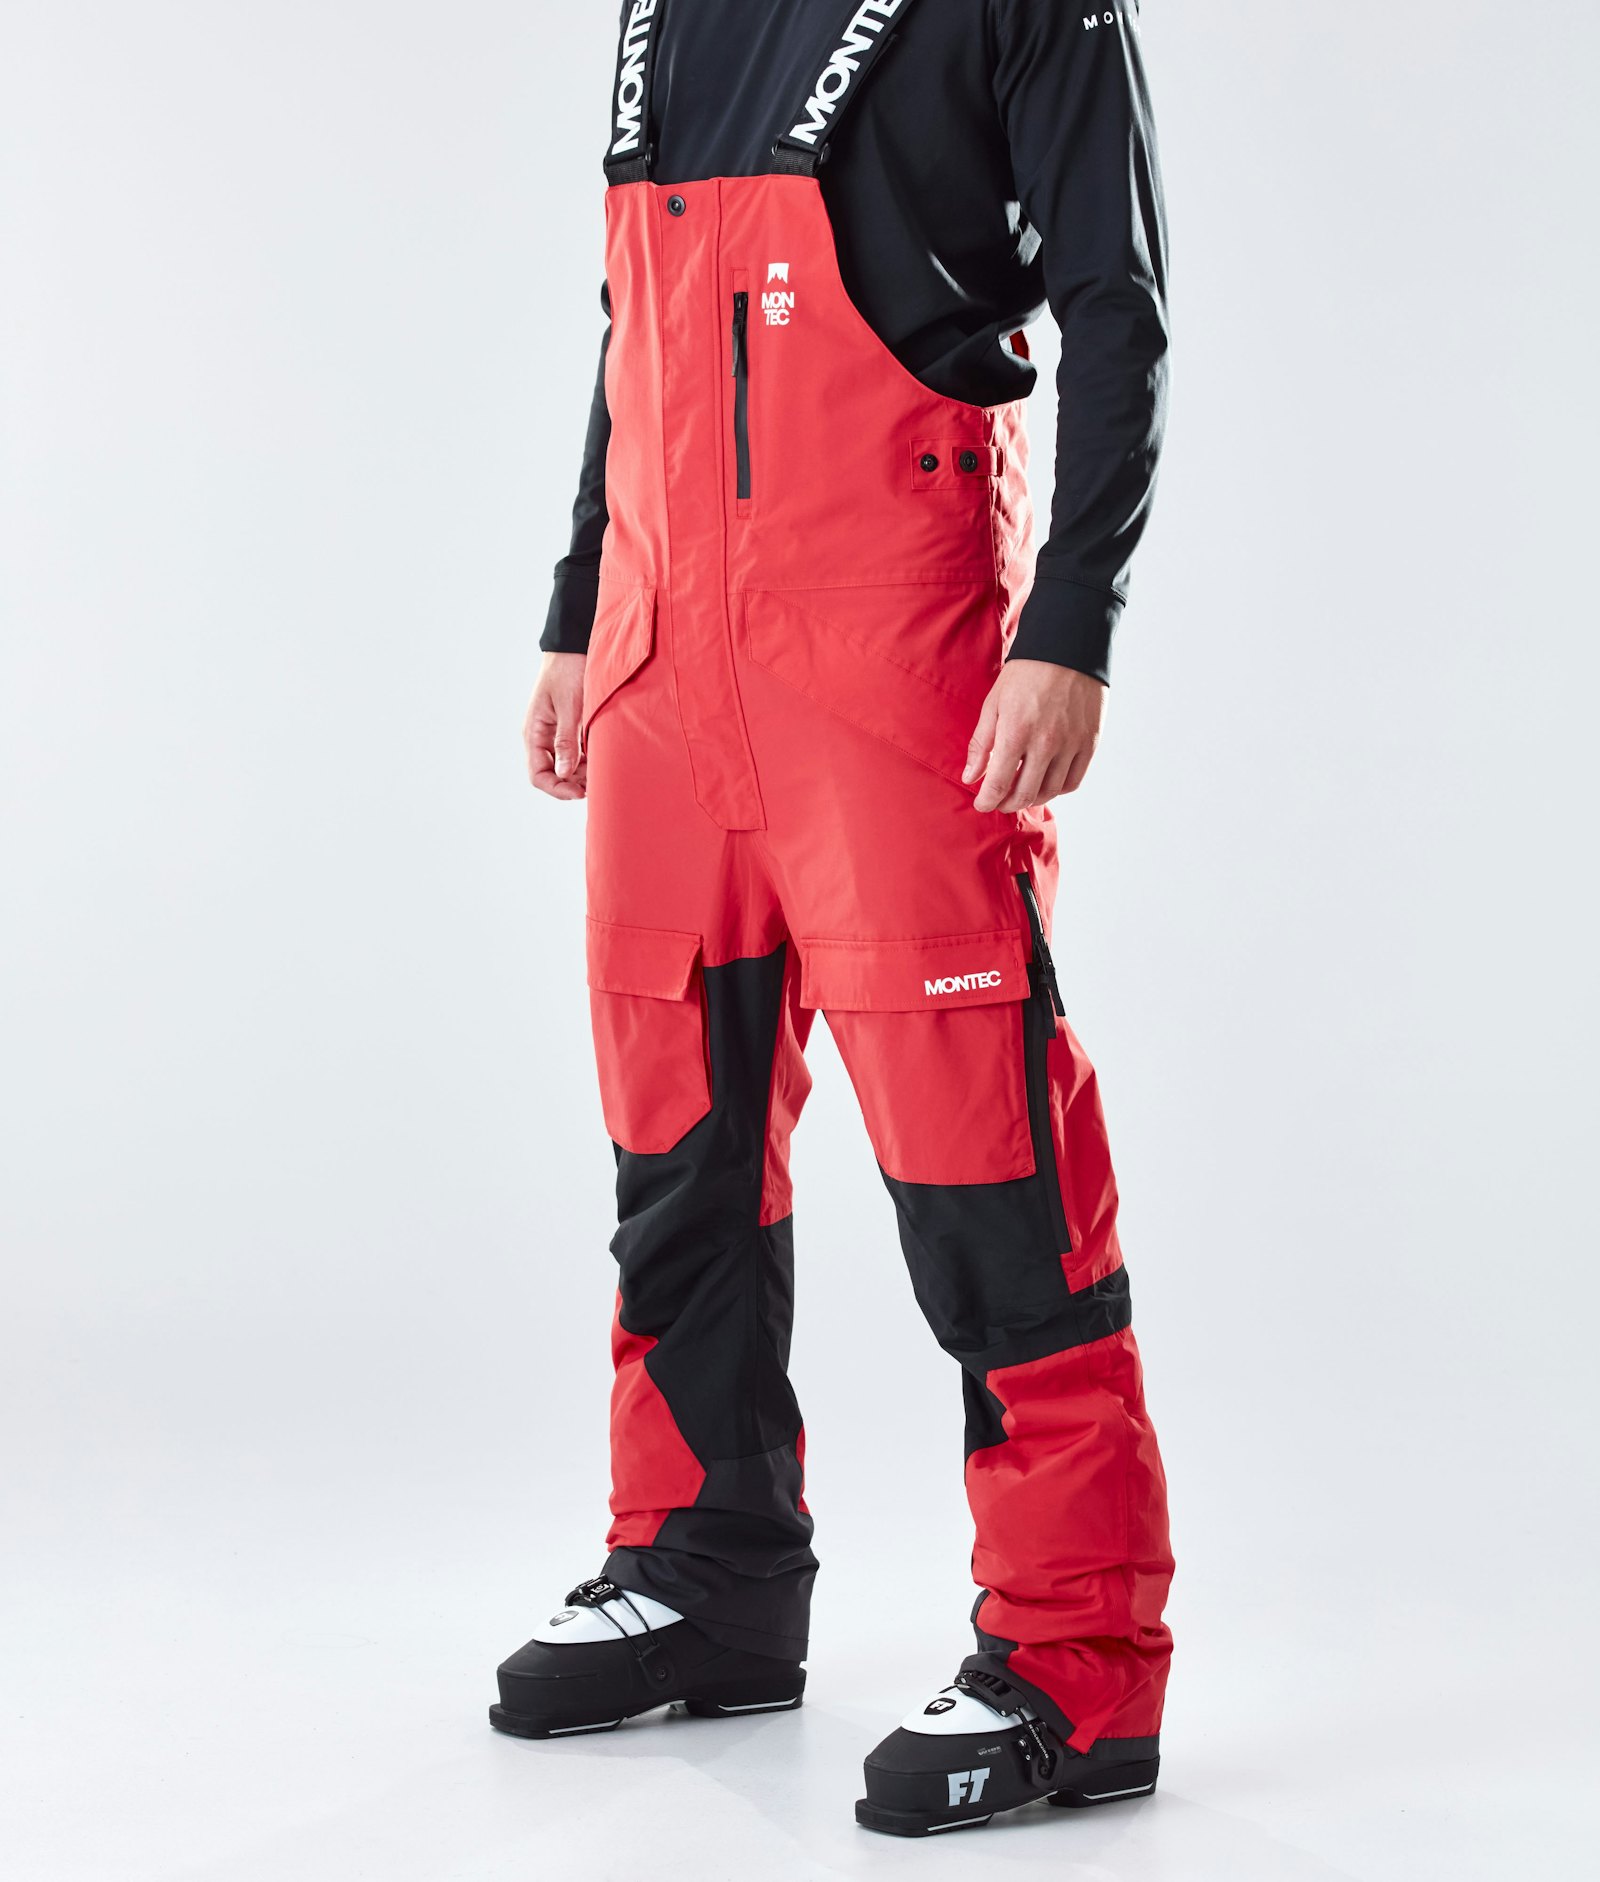 Fawk 2020 Ski Pants Men Red/Black, Image 1 of 6